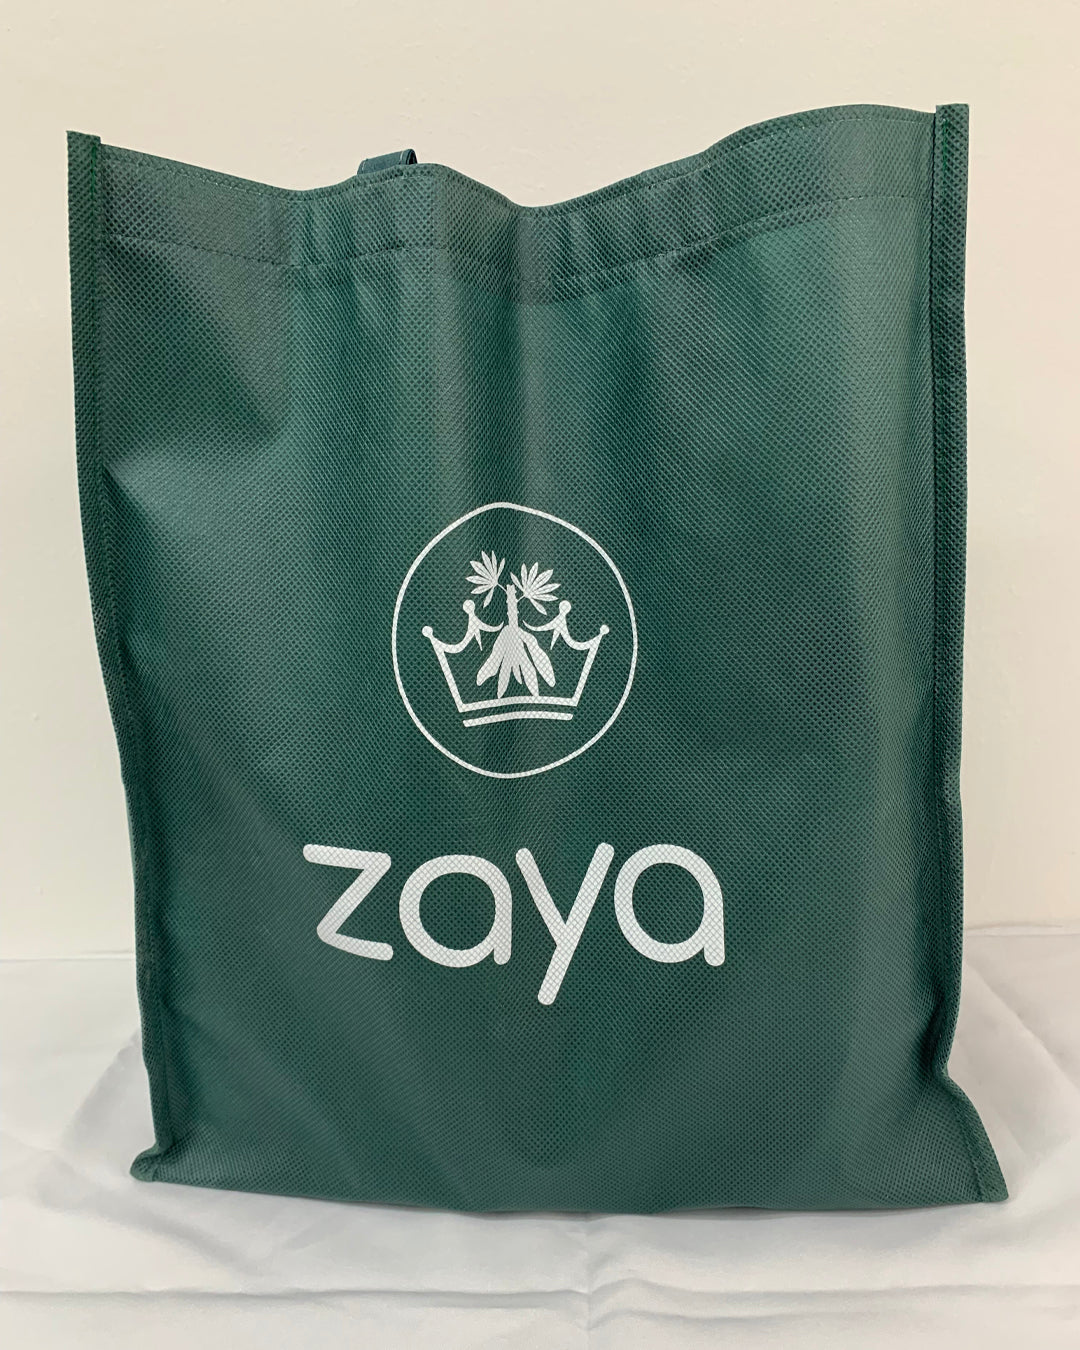 Eco Bag Zaya